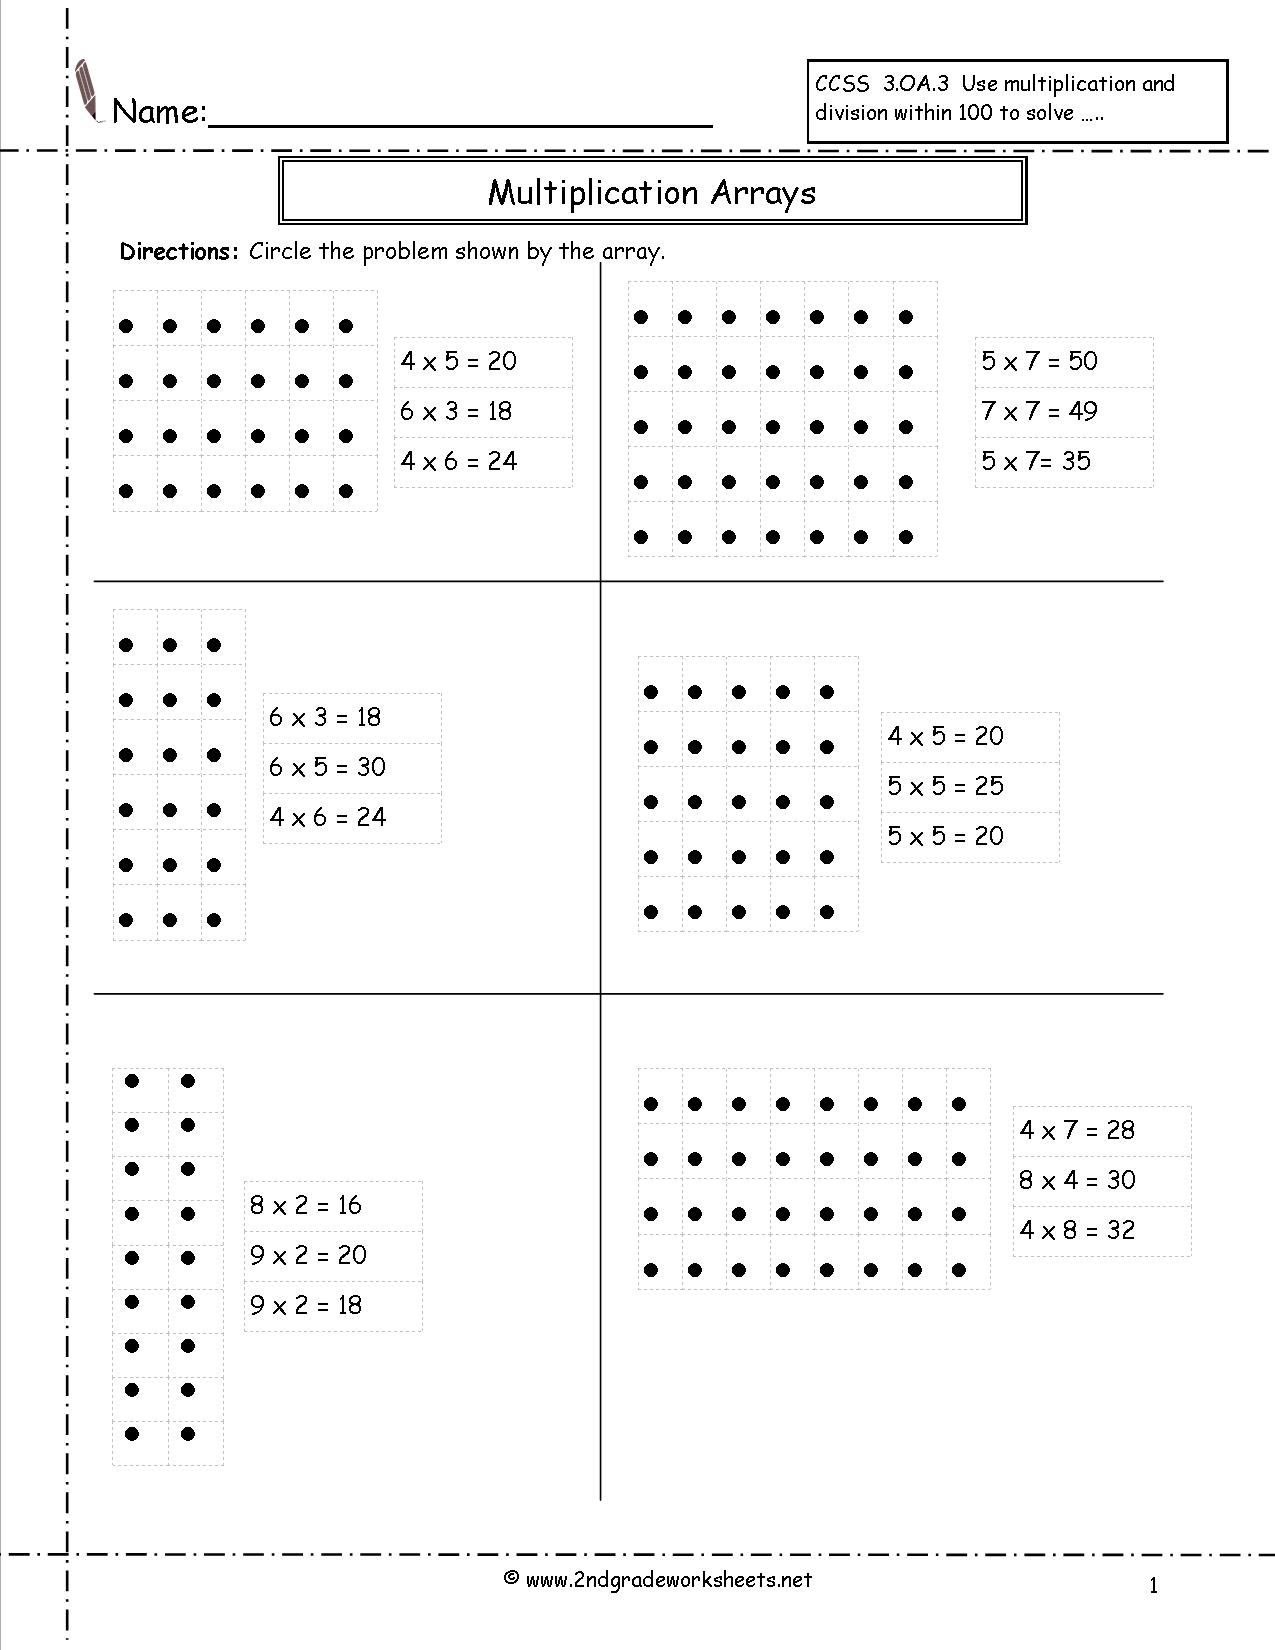 Array Multiplication Worksheet Image